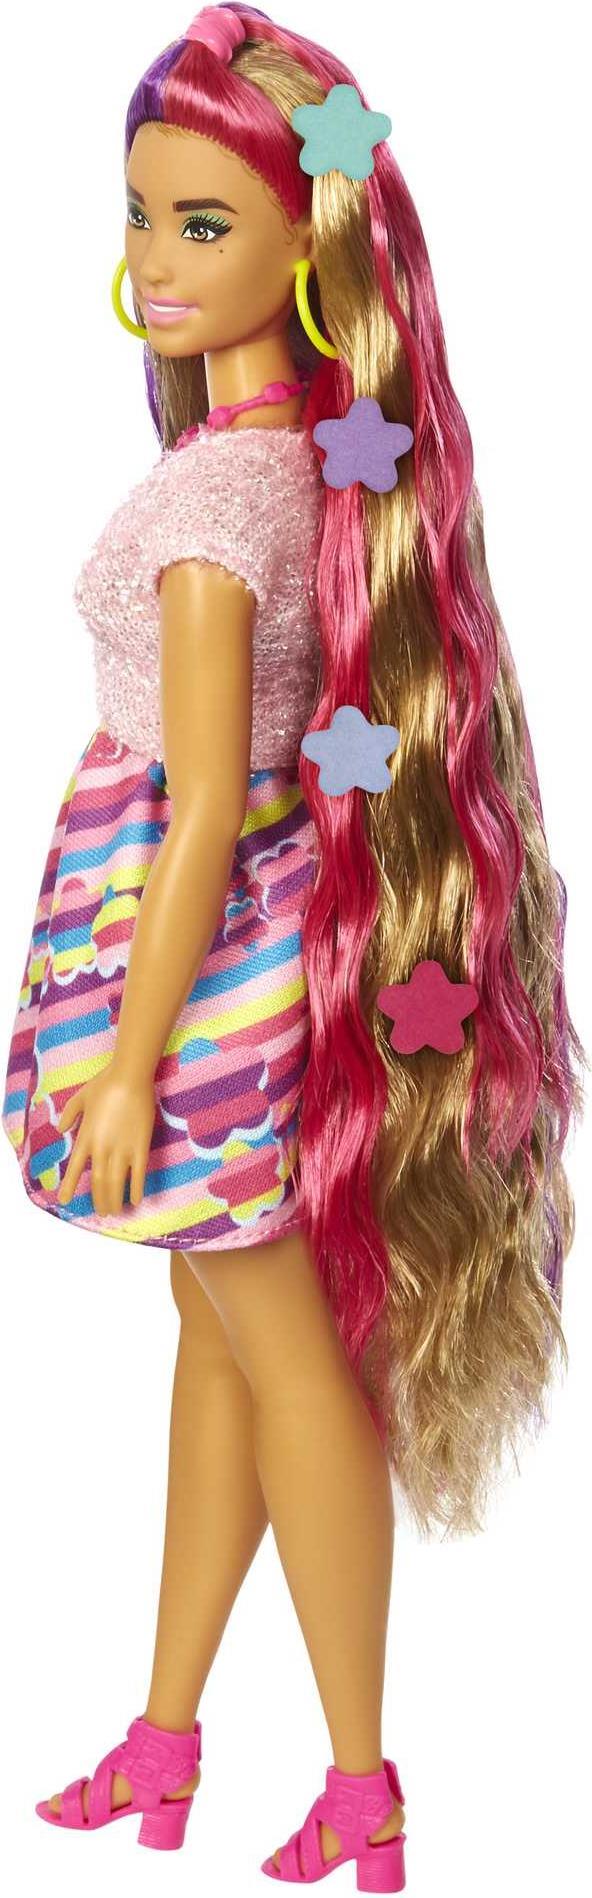 Barbie Totally Hair HCM89 - Modepuppe - Weiblich - 3 Jahr(e) - Mädchen - 298 mm - 184 g (HCM89)